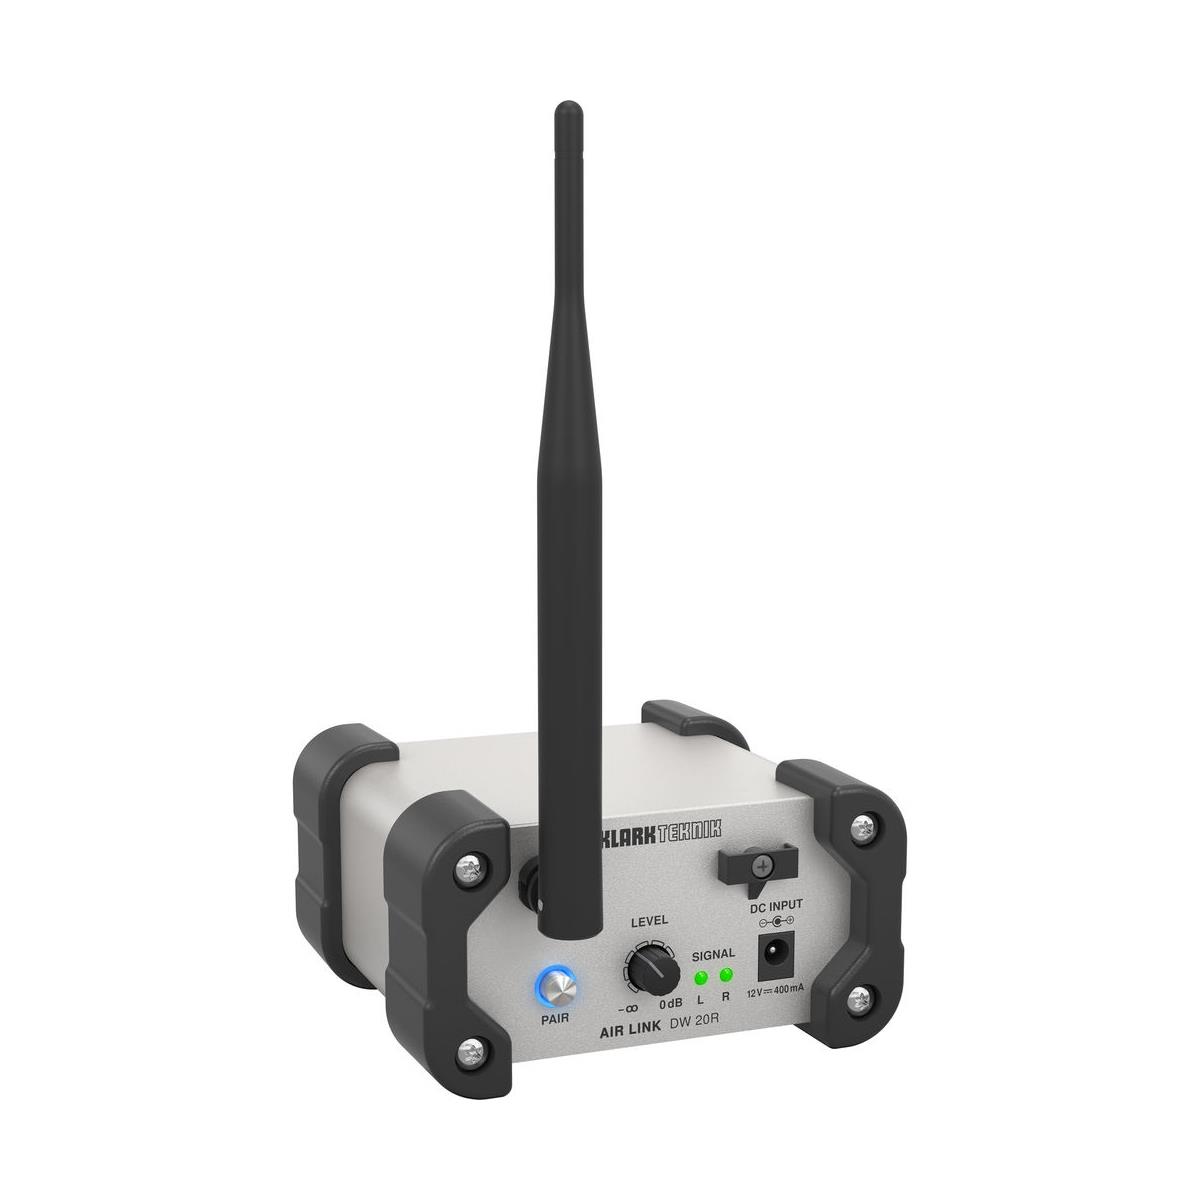 

Koss Klark Teknik AIR LINK DW 20R 2.4 GHz Wireless Stereo Receiver